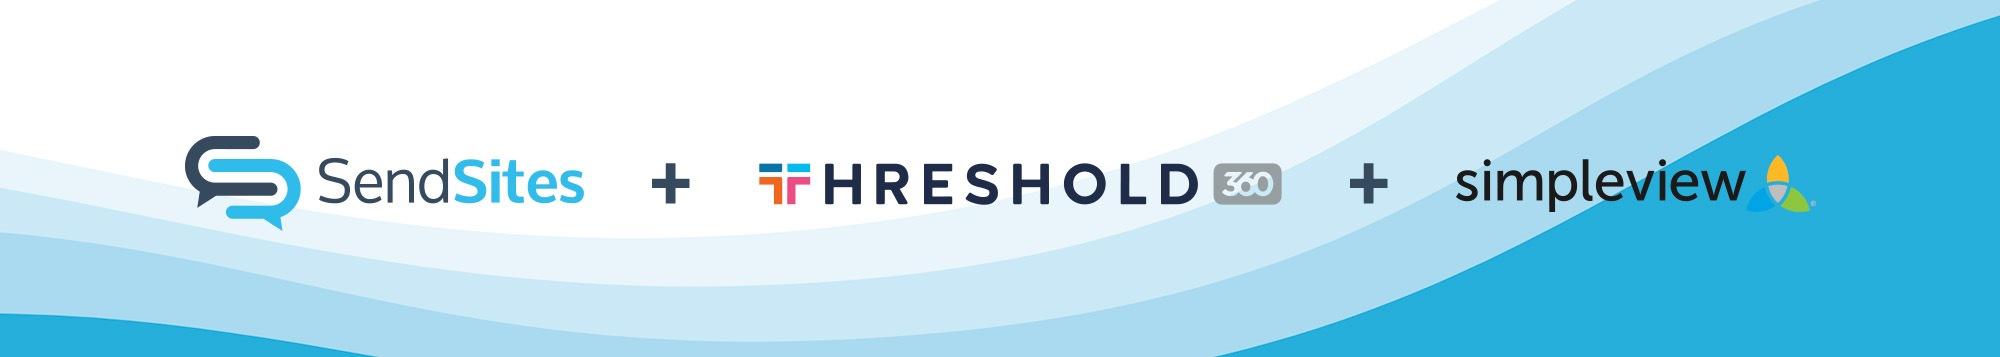 SIMPLEVIEW-SENDSITES-THRESHOLD360